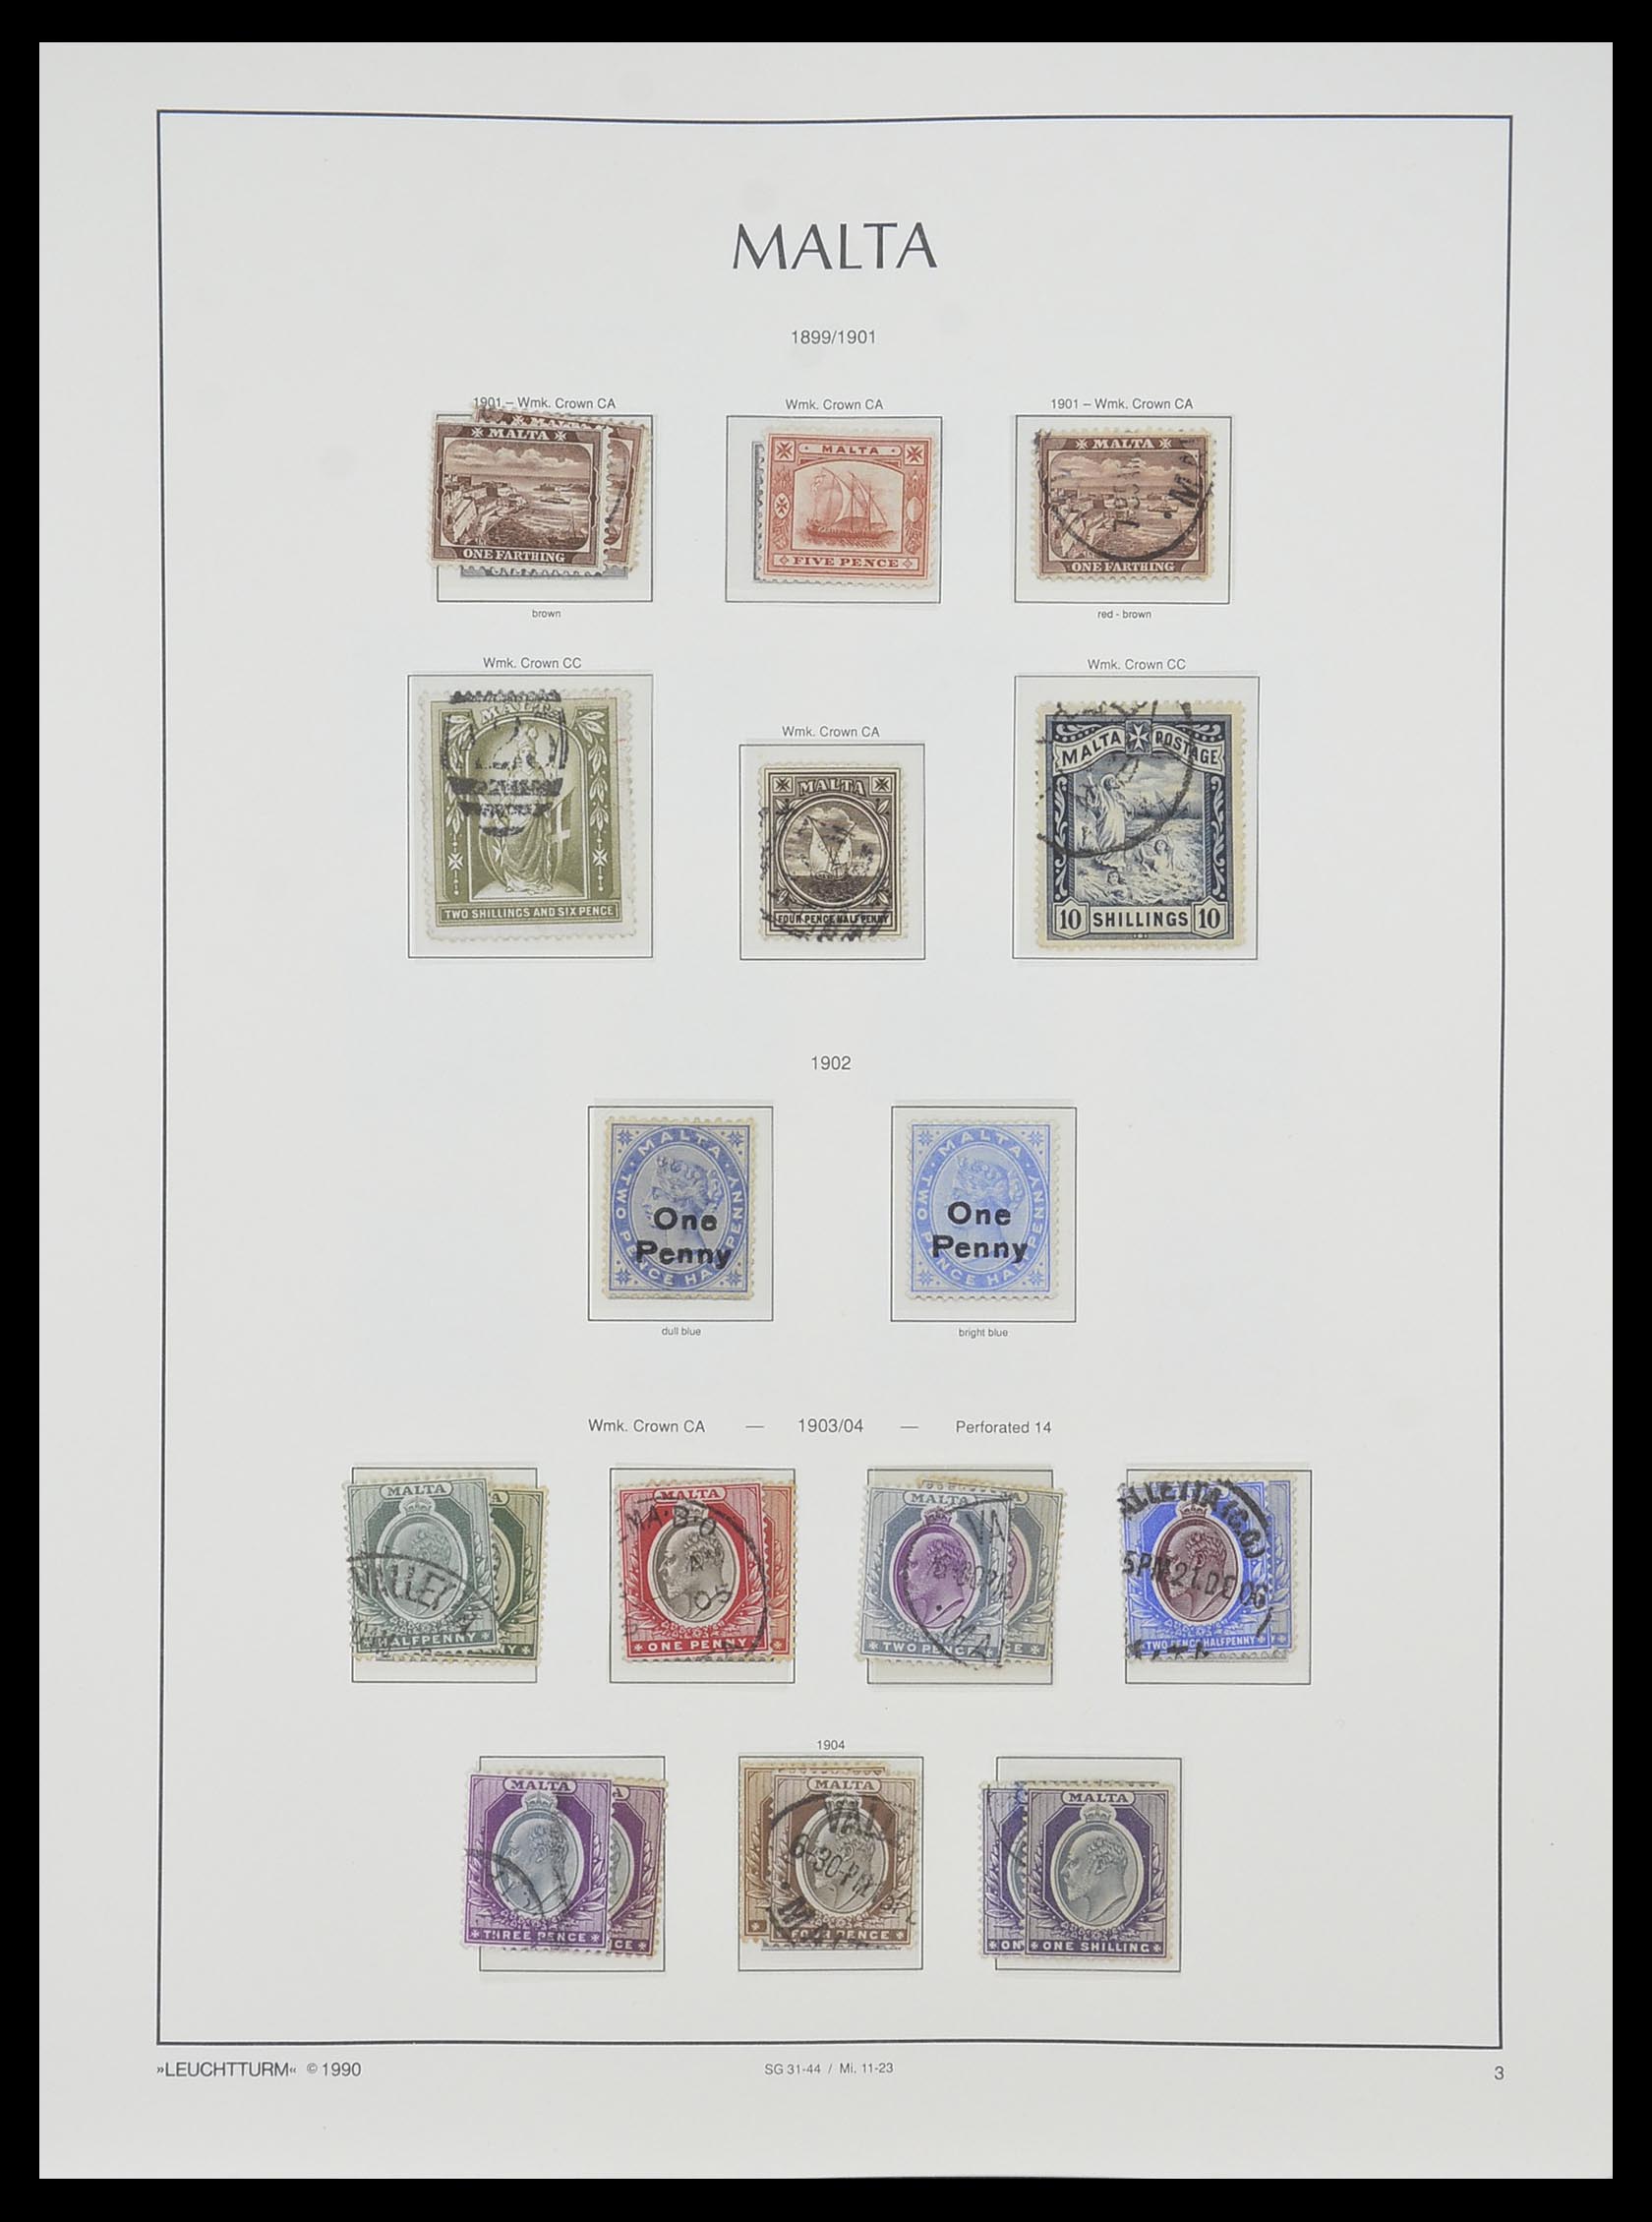 33968 003 - Stamp collection 33968 Malta 1861-2001.